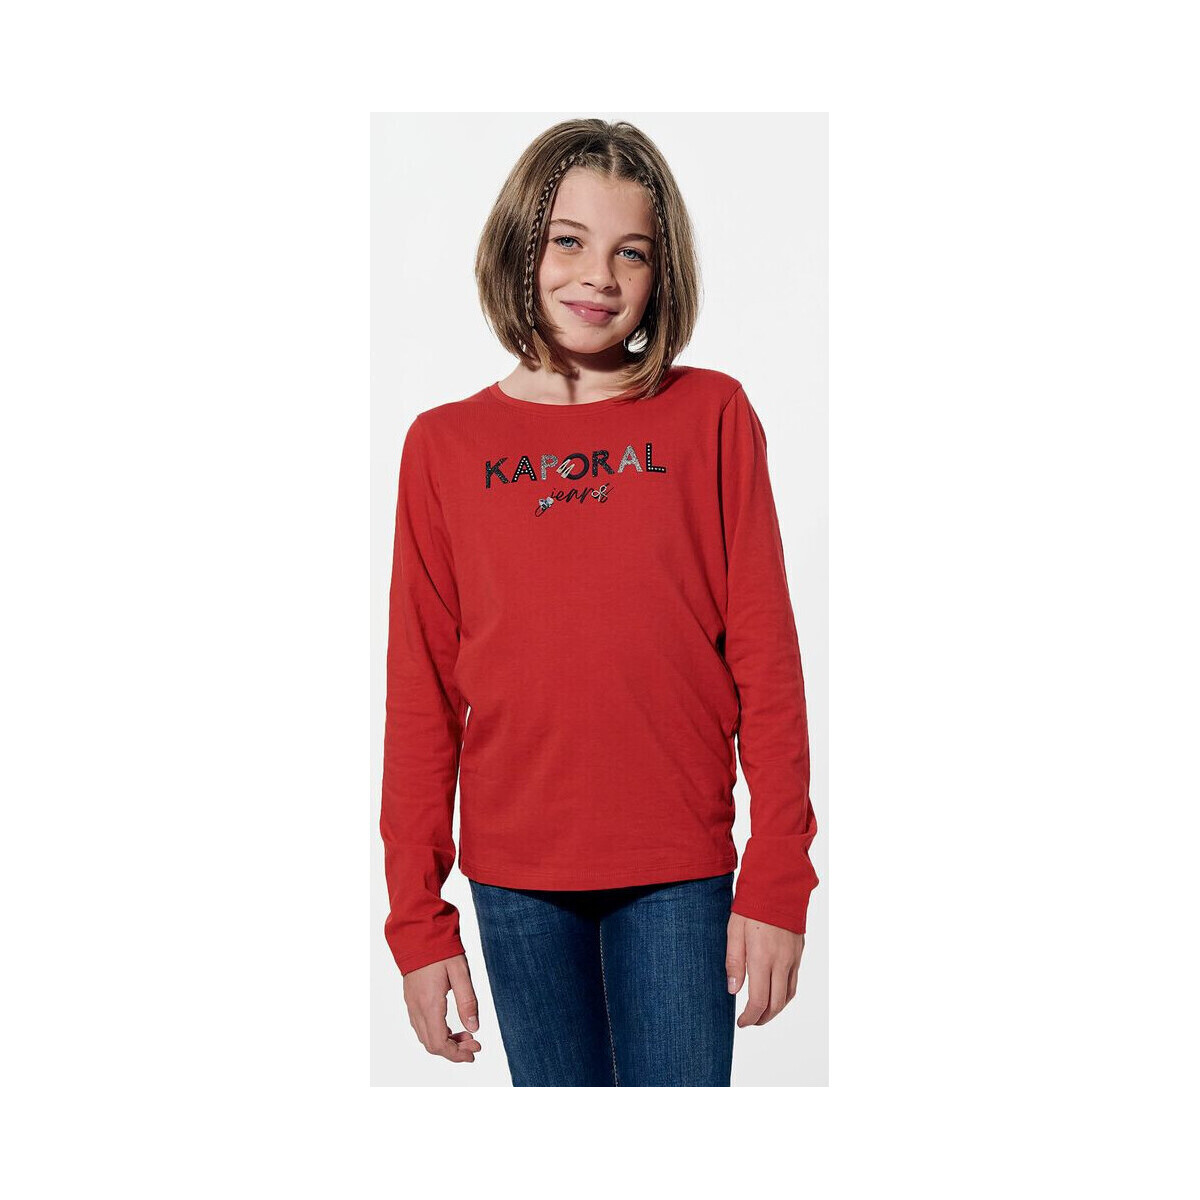 Kaporal Autres Junior - Tee shirt - rouge cwCnUmTr